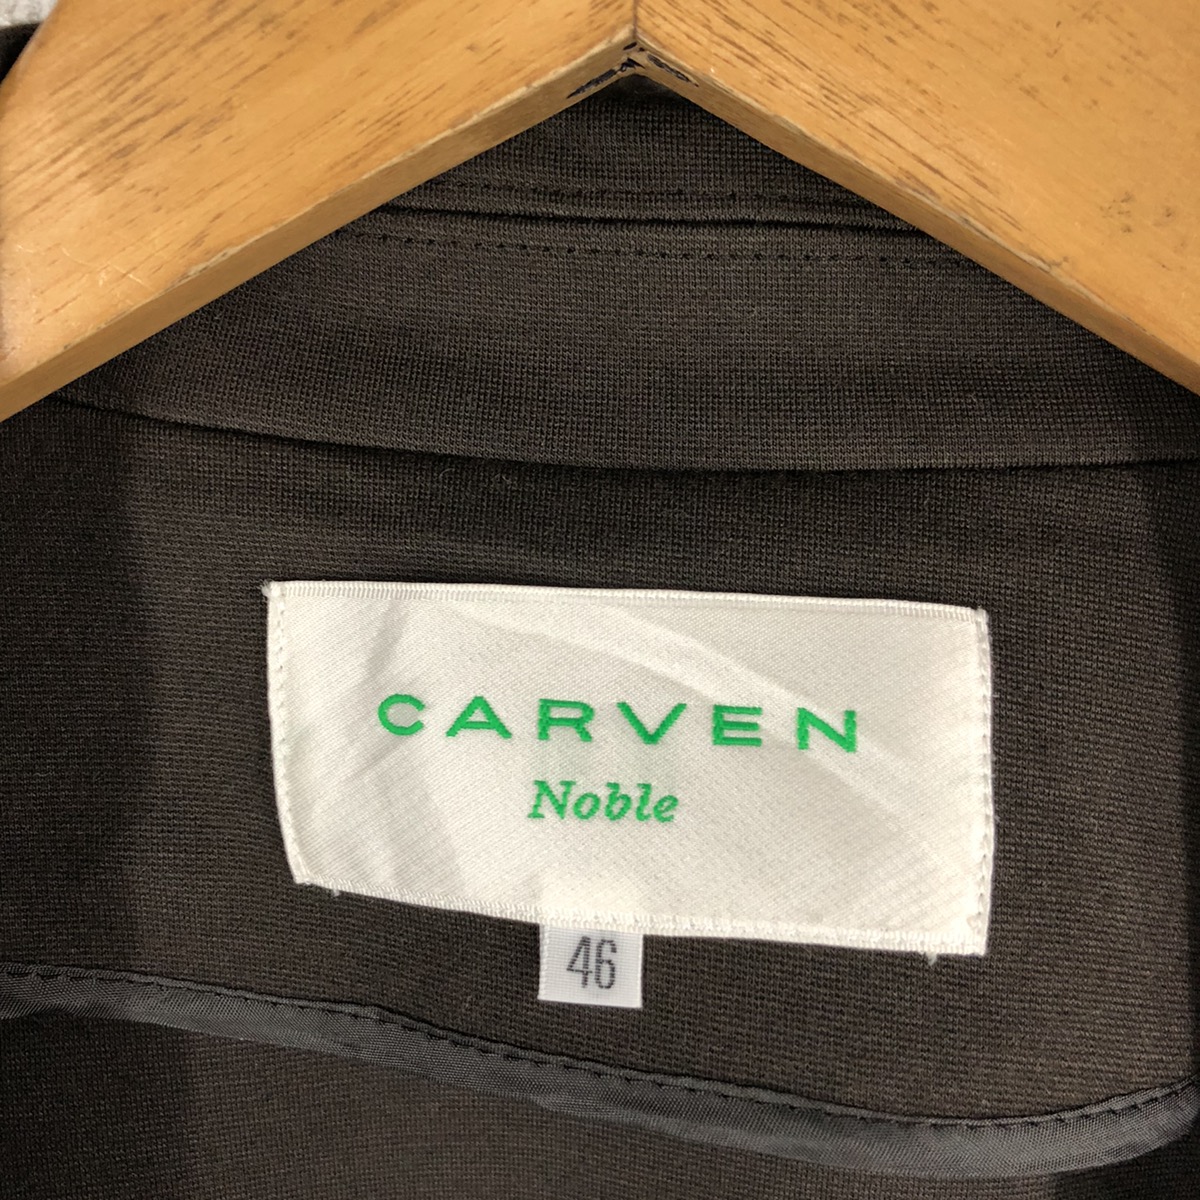 Carven noble jacket - 10